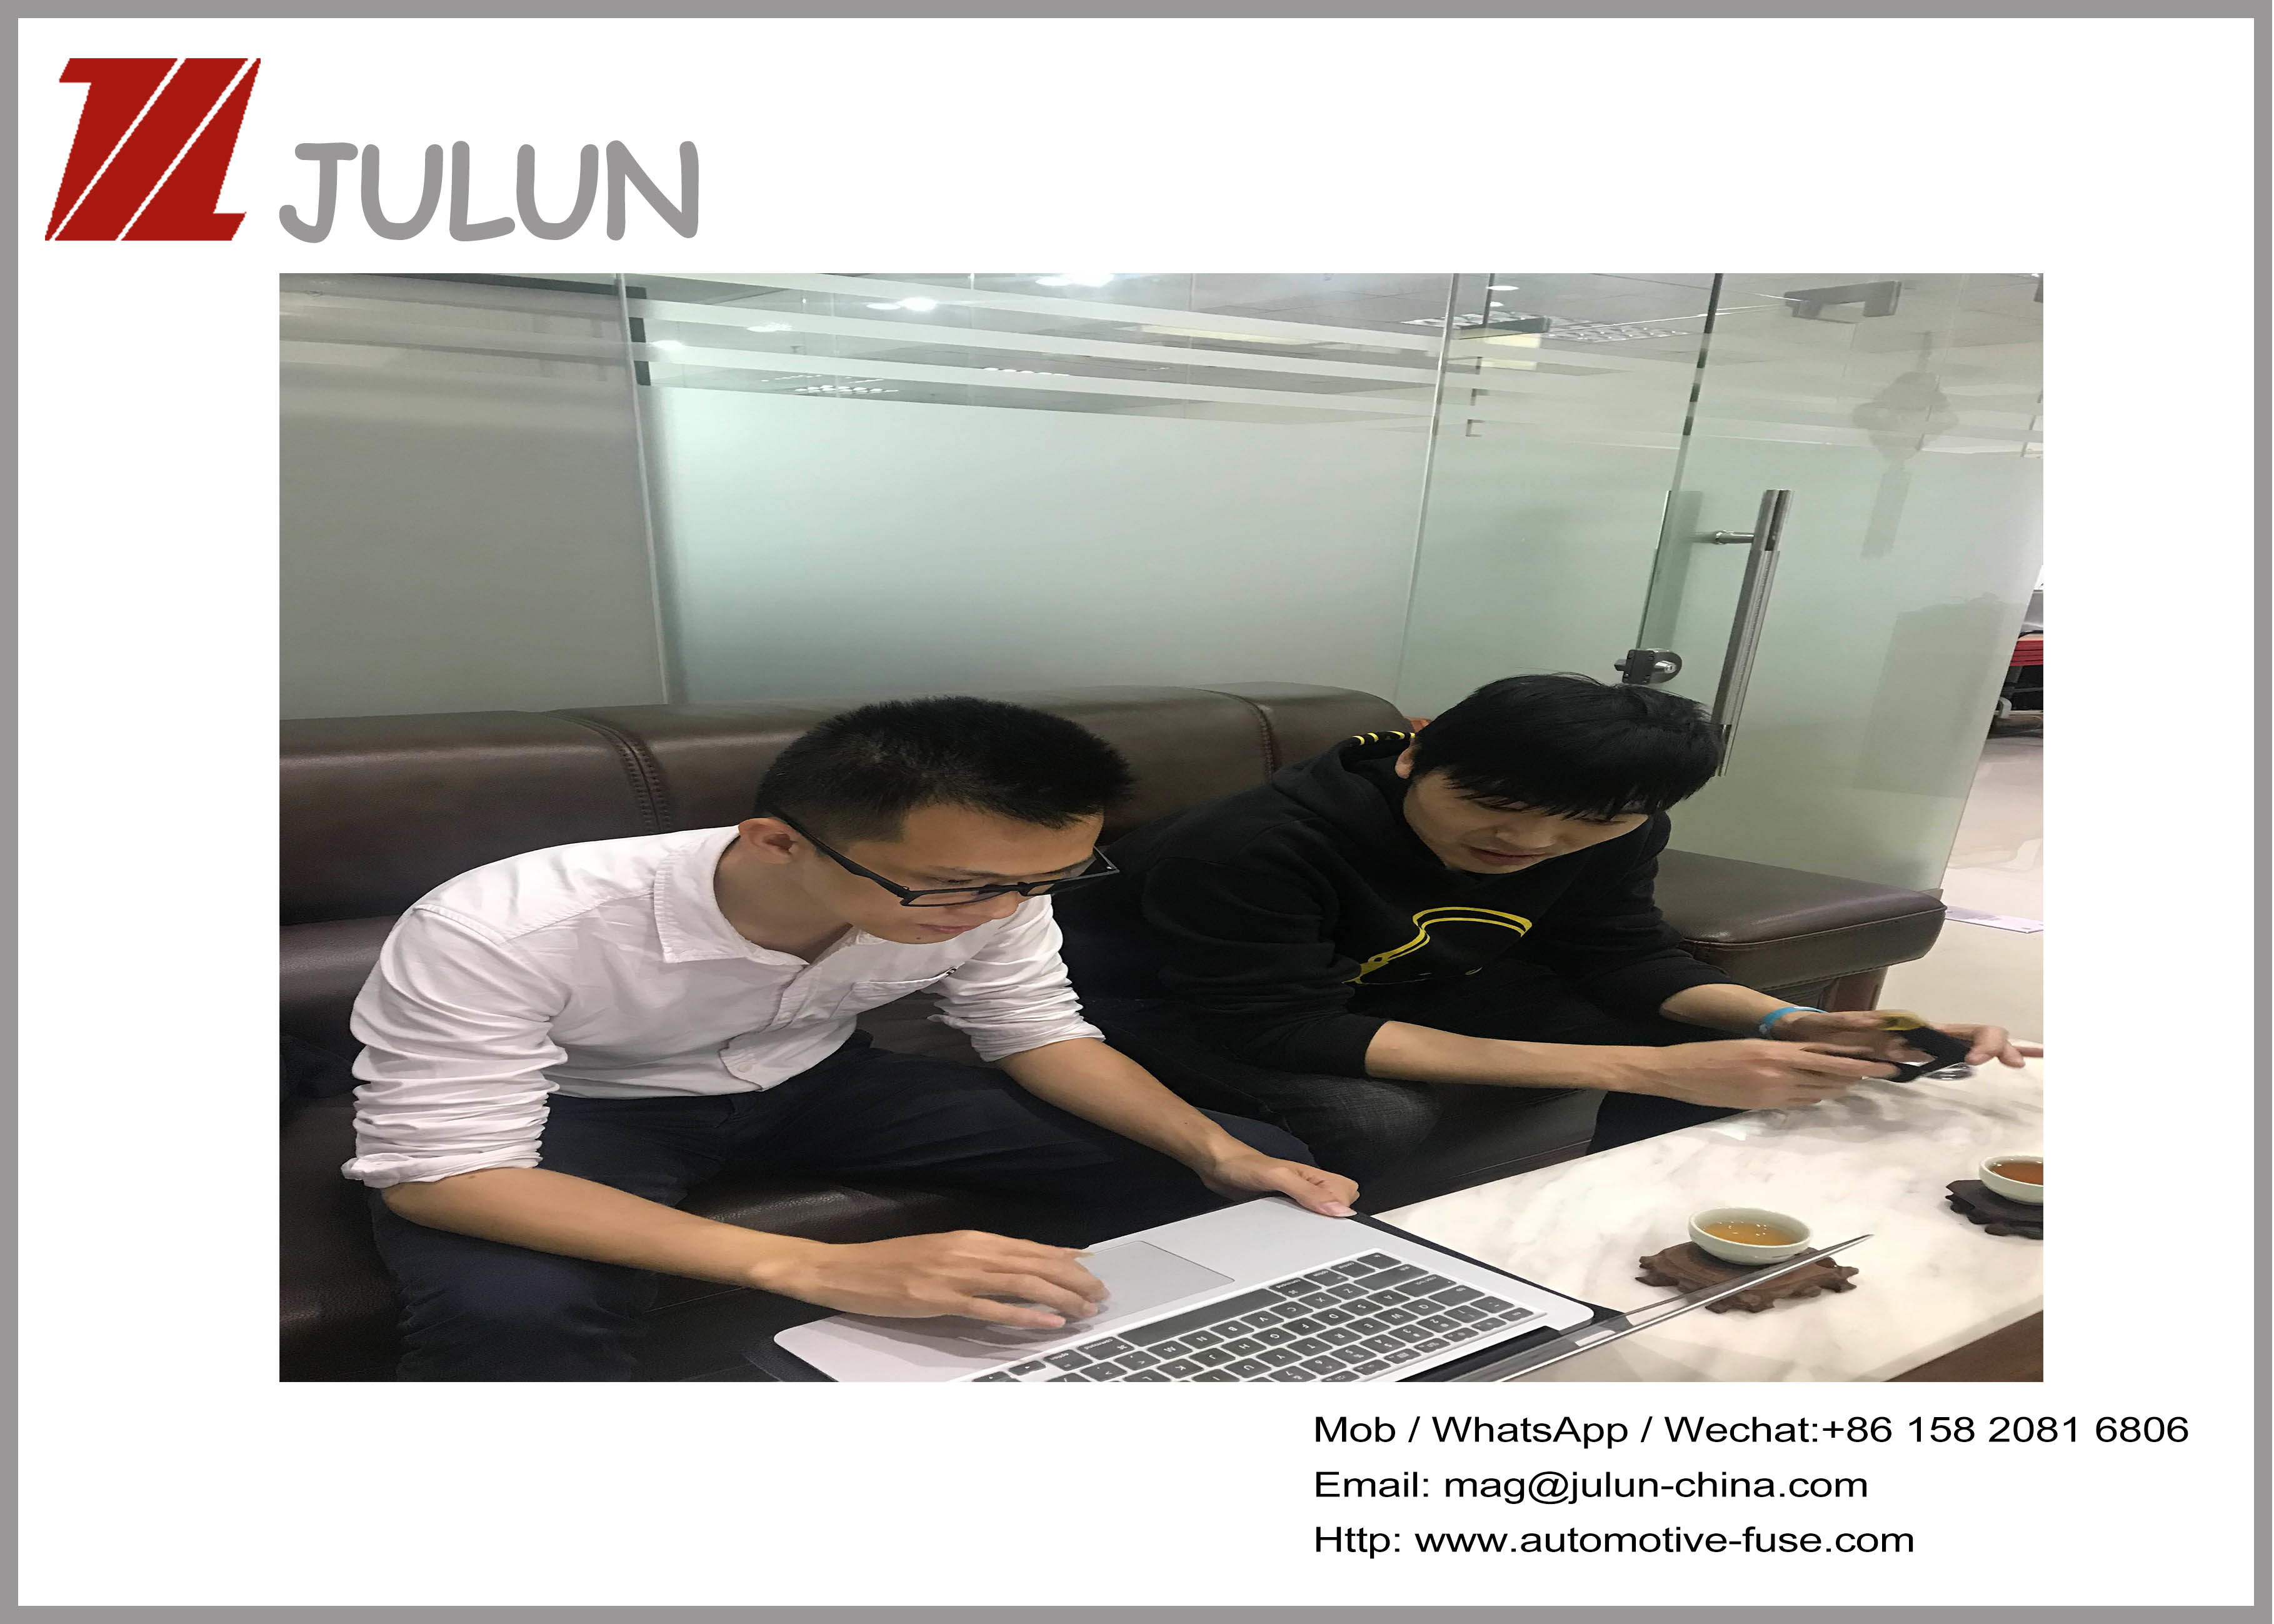 चीन JULUN (H.K)CO.,LTD (DONGGUAN JULUN ELECTRONICS CO.,LTD) कंपनी प्रोफाइल